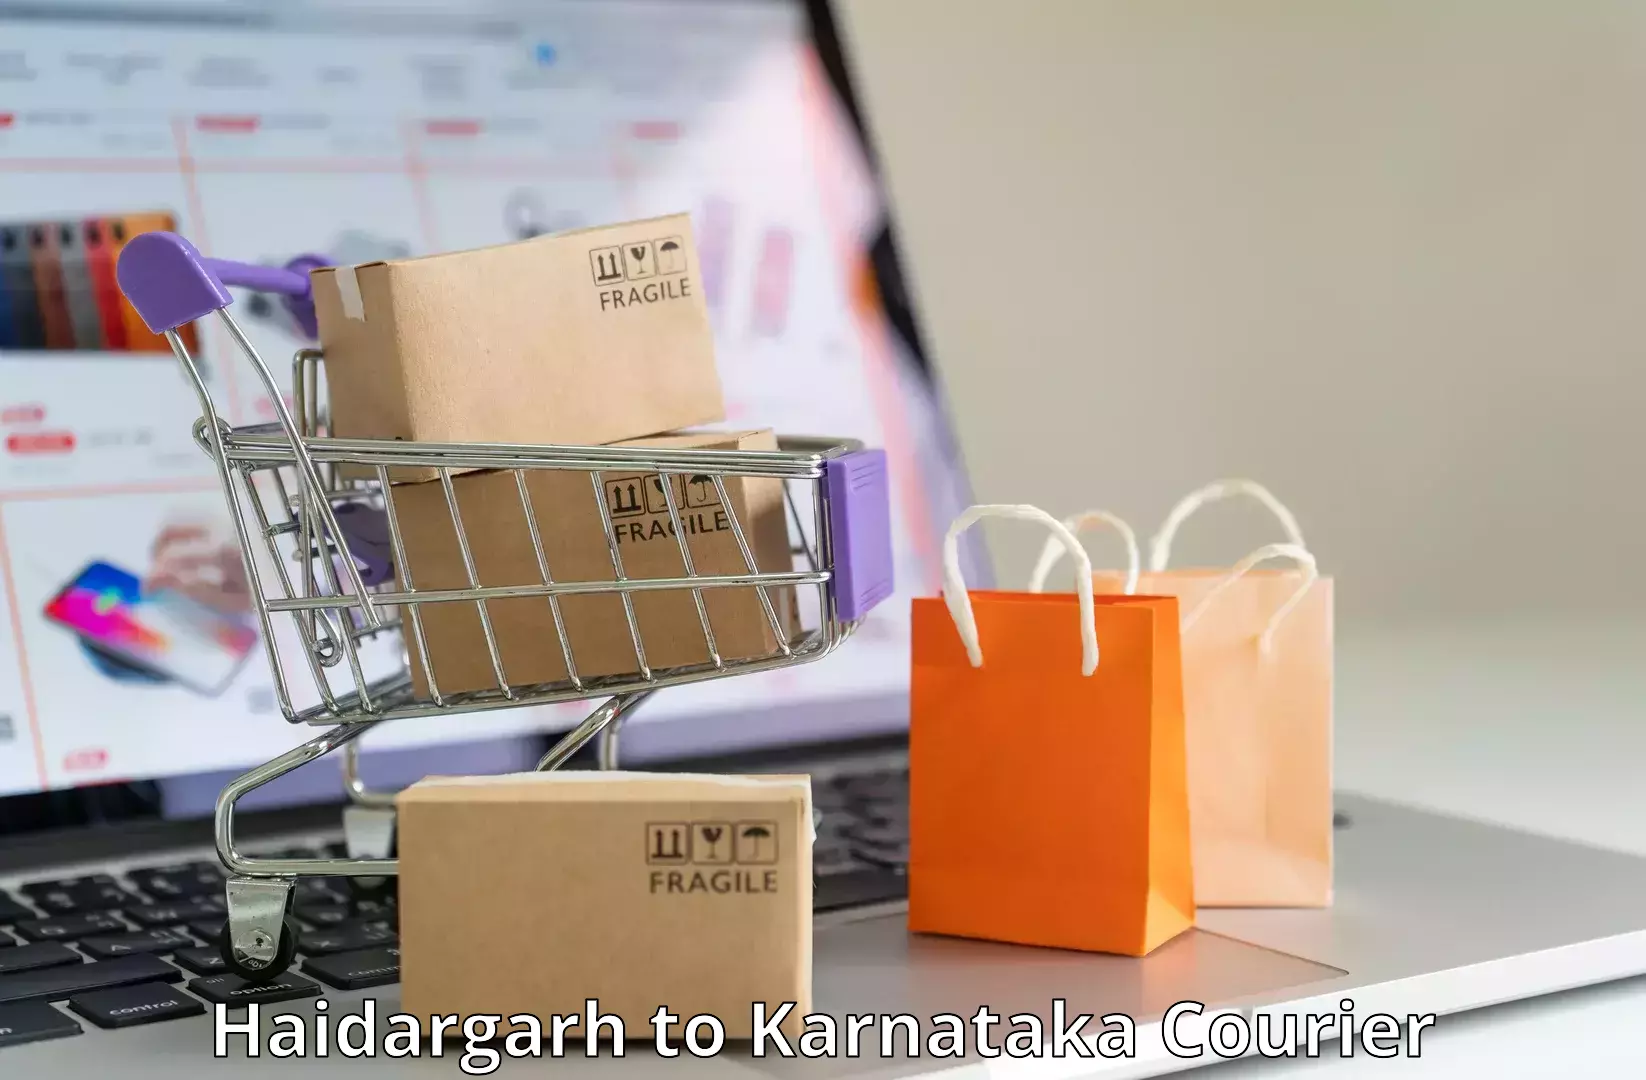 Nationwide delivery network in Haidargarh to Kanjarakatte